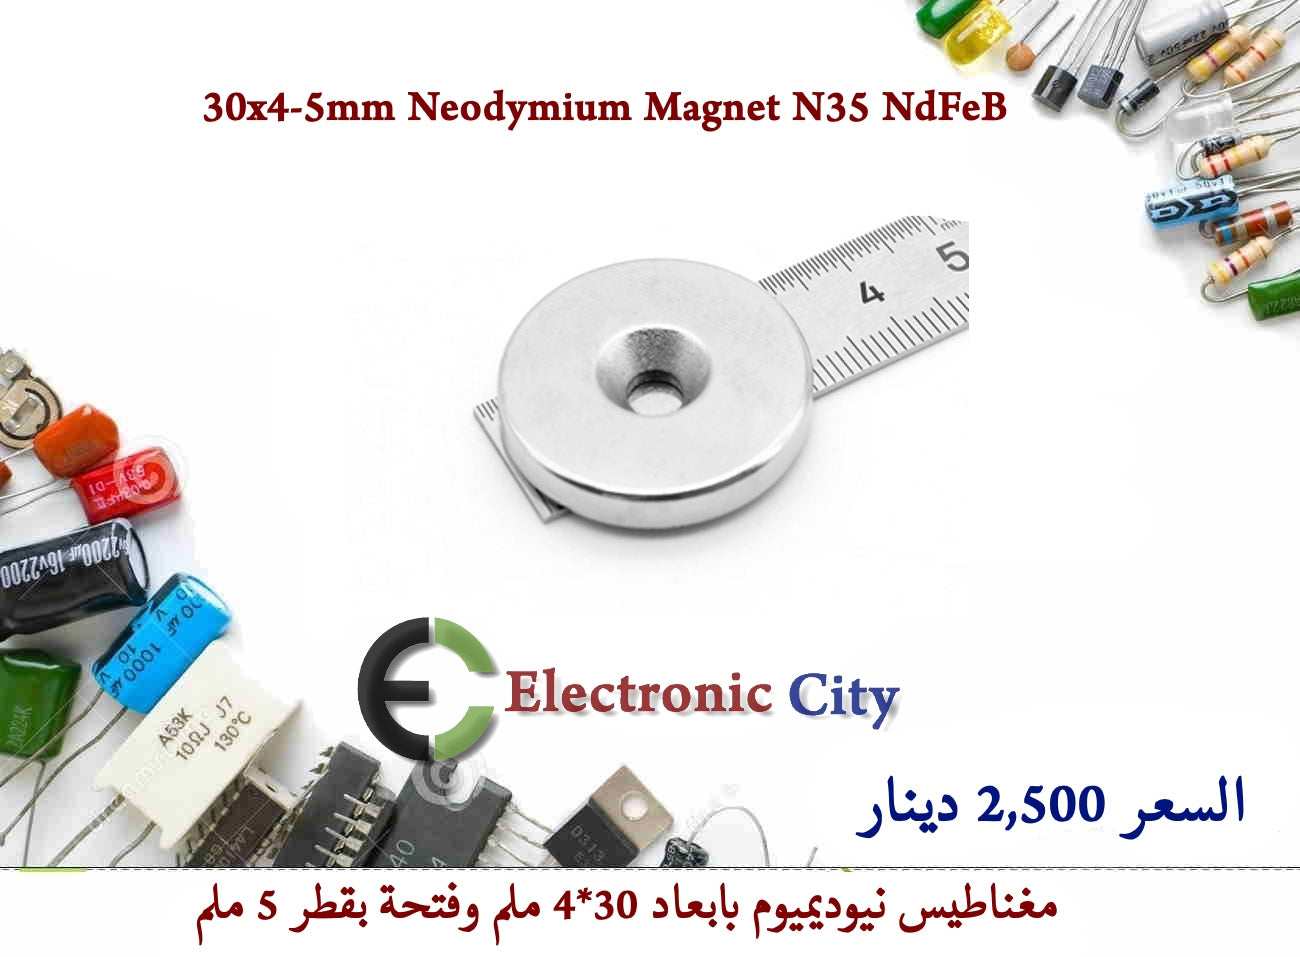 30x4-5mm Neodymium Magnet N35 NdFeB